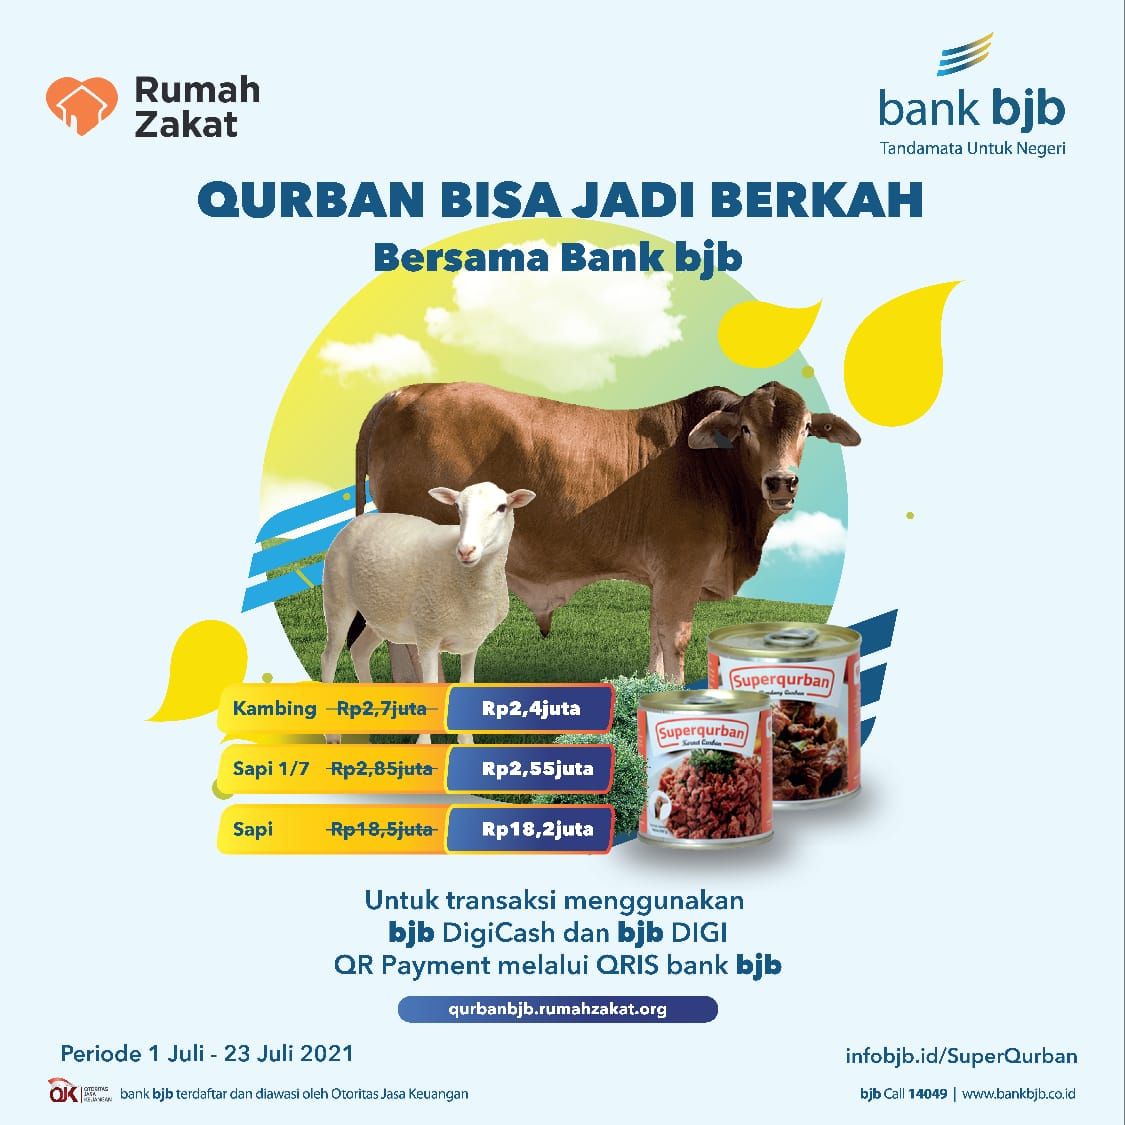 Dalam rangka menyambut Hari Raya Iduladha yang jatuh pada hari Selasa 20 Juli 2021, bank bjb menggelar sejumlah promo bagi nasabah yang hendak membeli hewan kurban. Mulai dari potongan harga hingga pemberian hampers eksklusif.